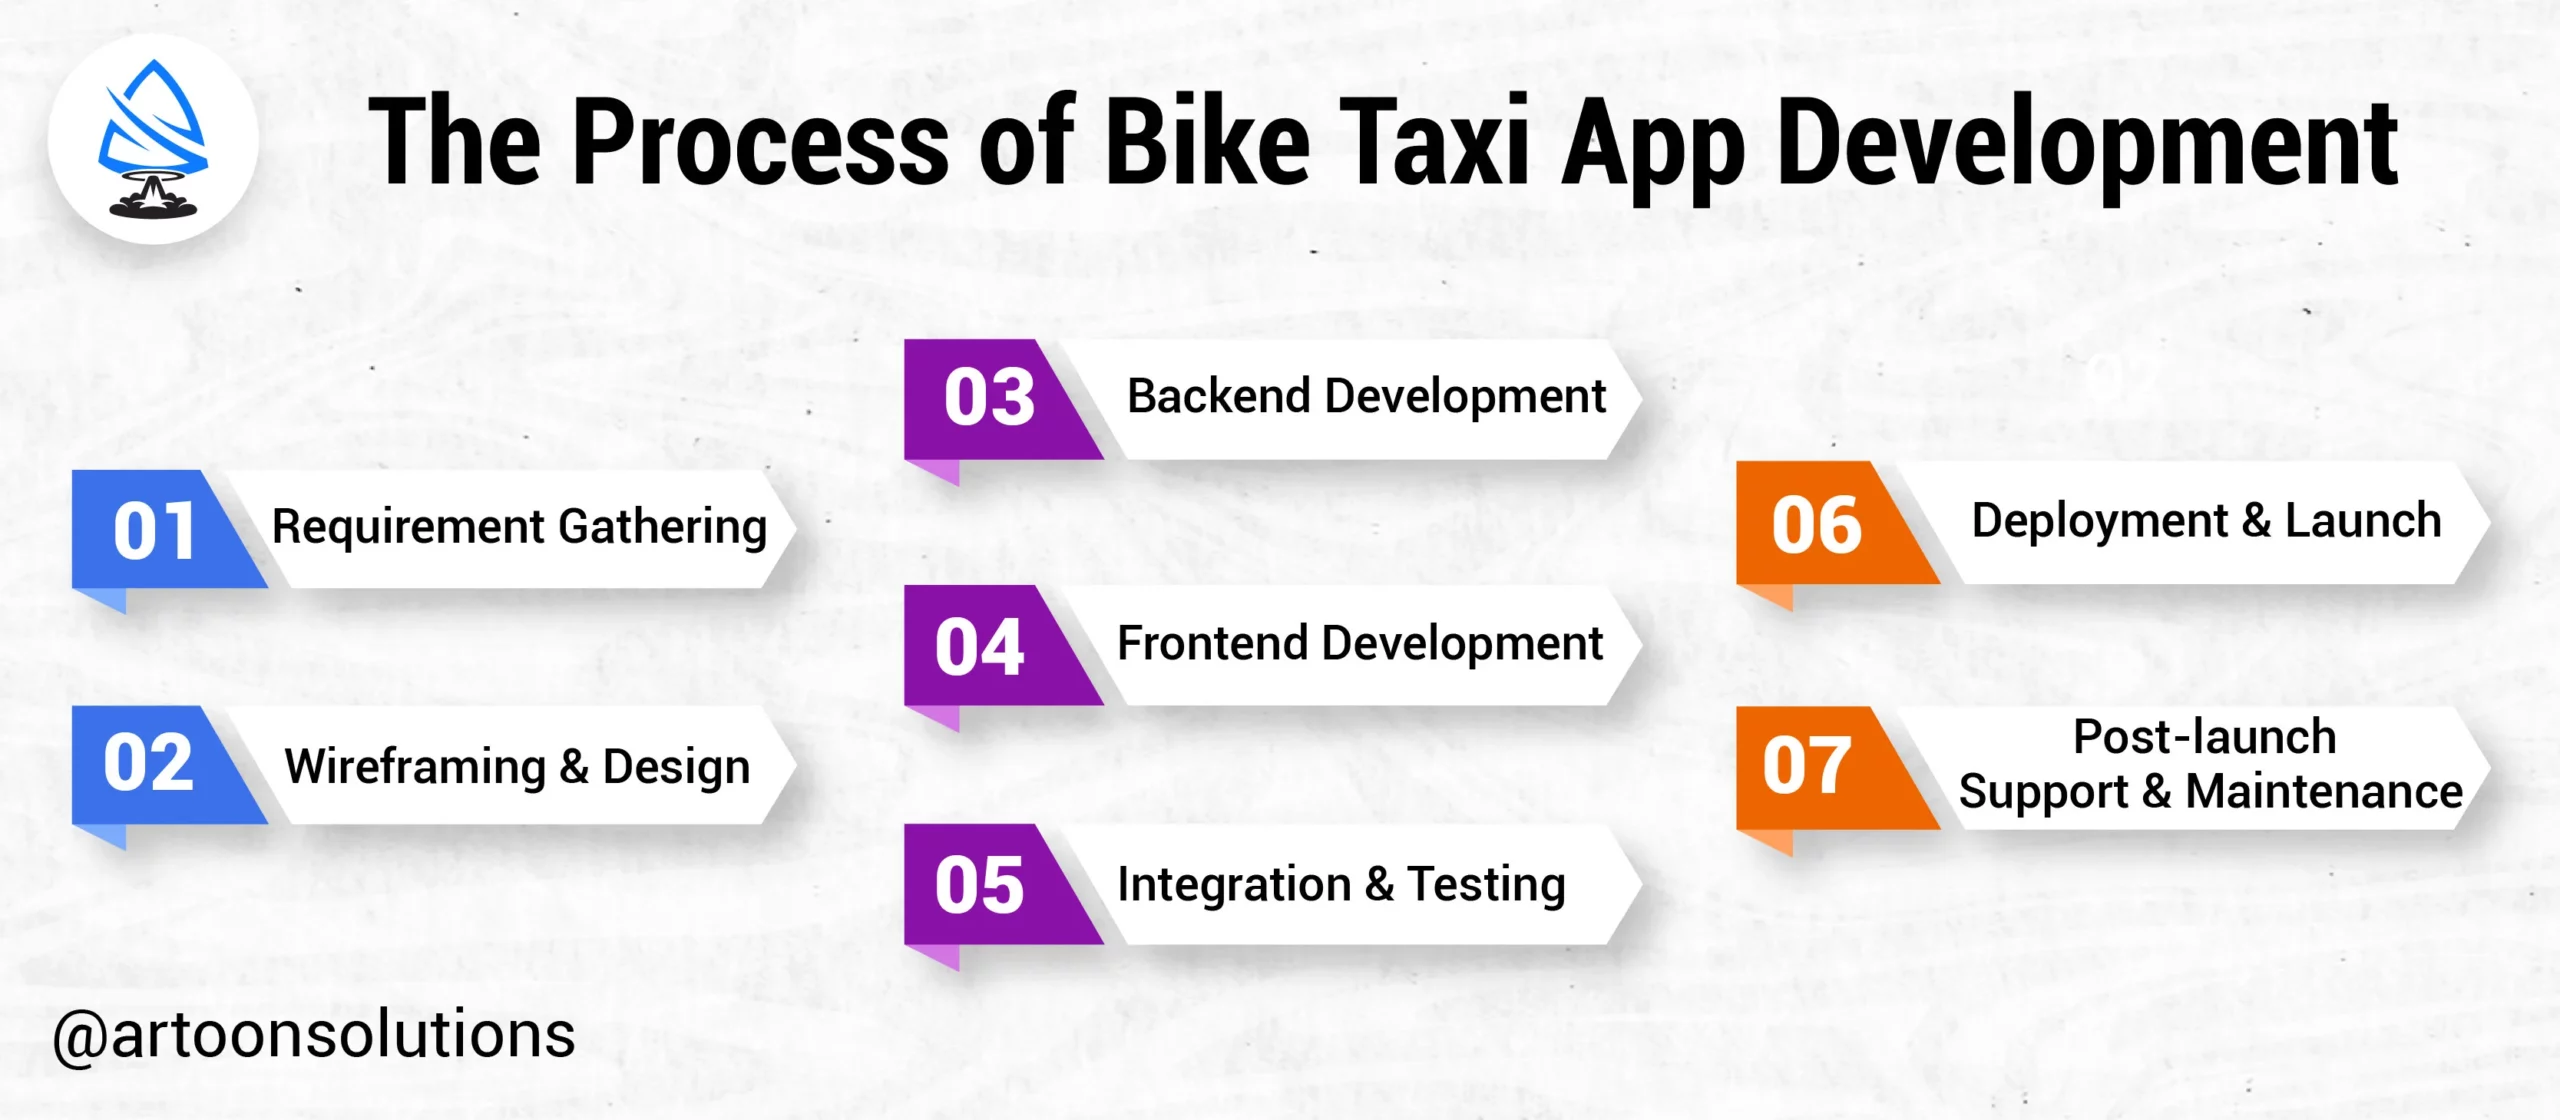 The Process of Bike Taxi App Development